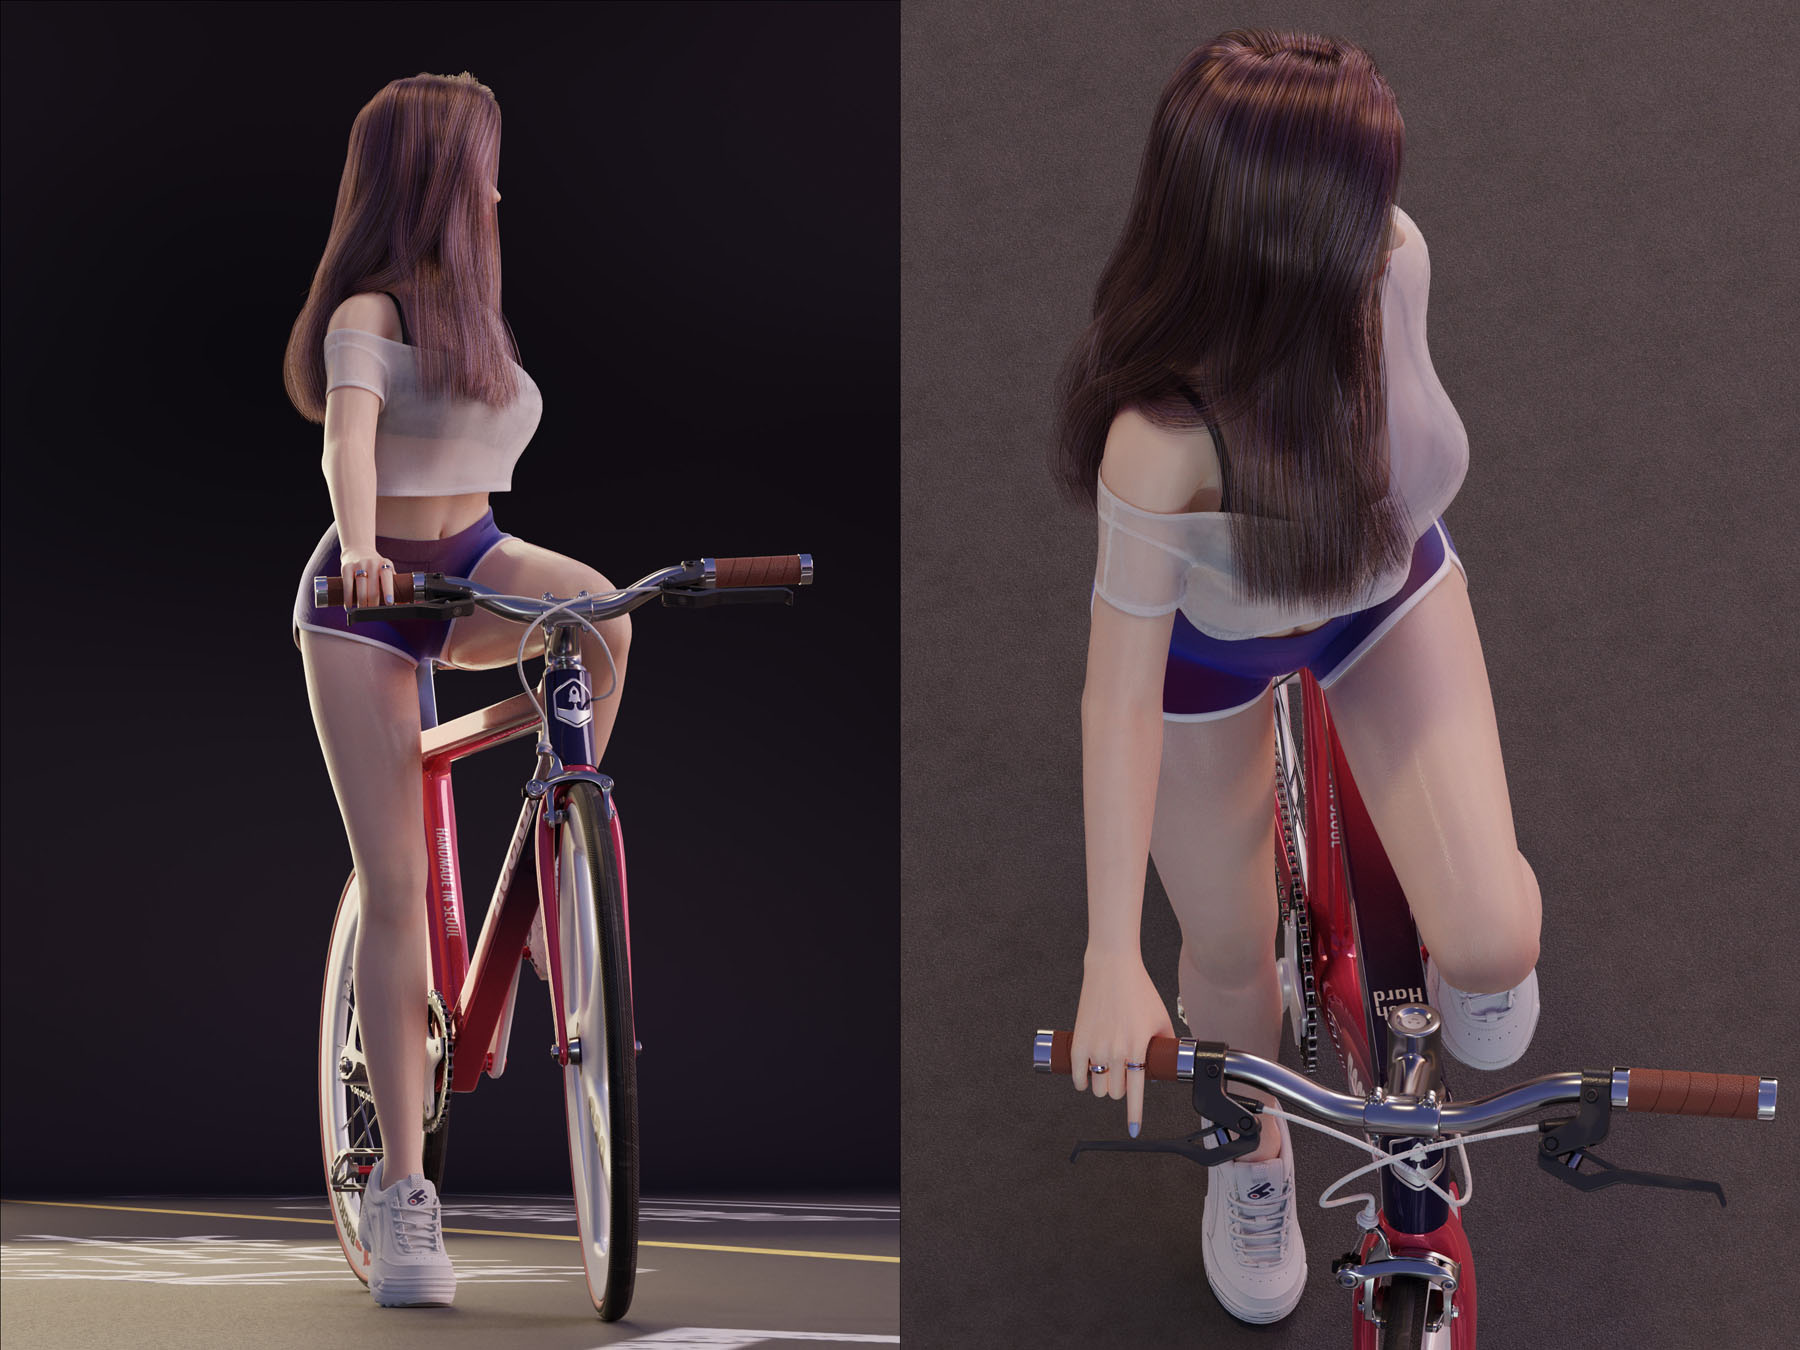 Cycling Girl Bottom and Top Shot